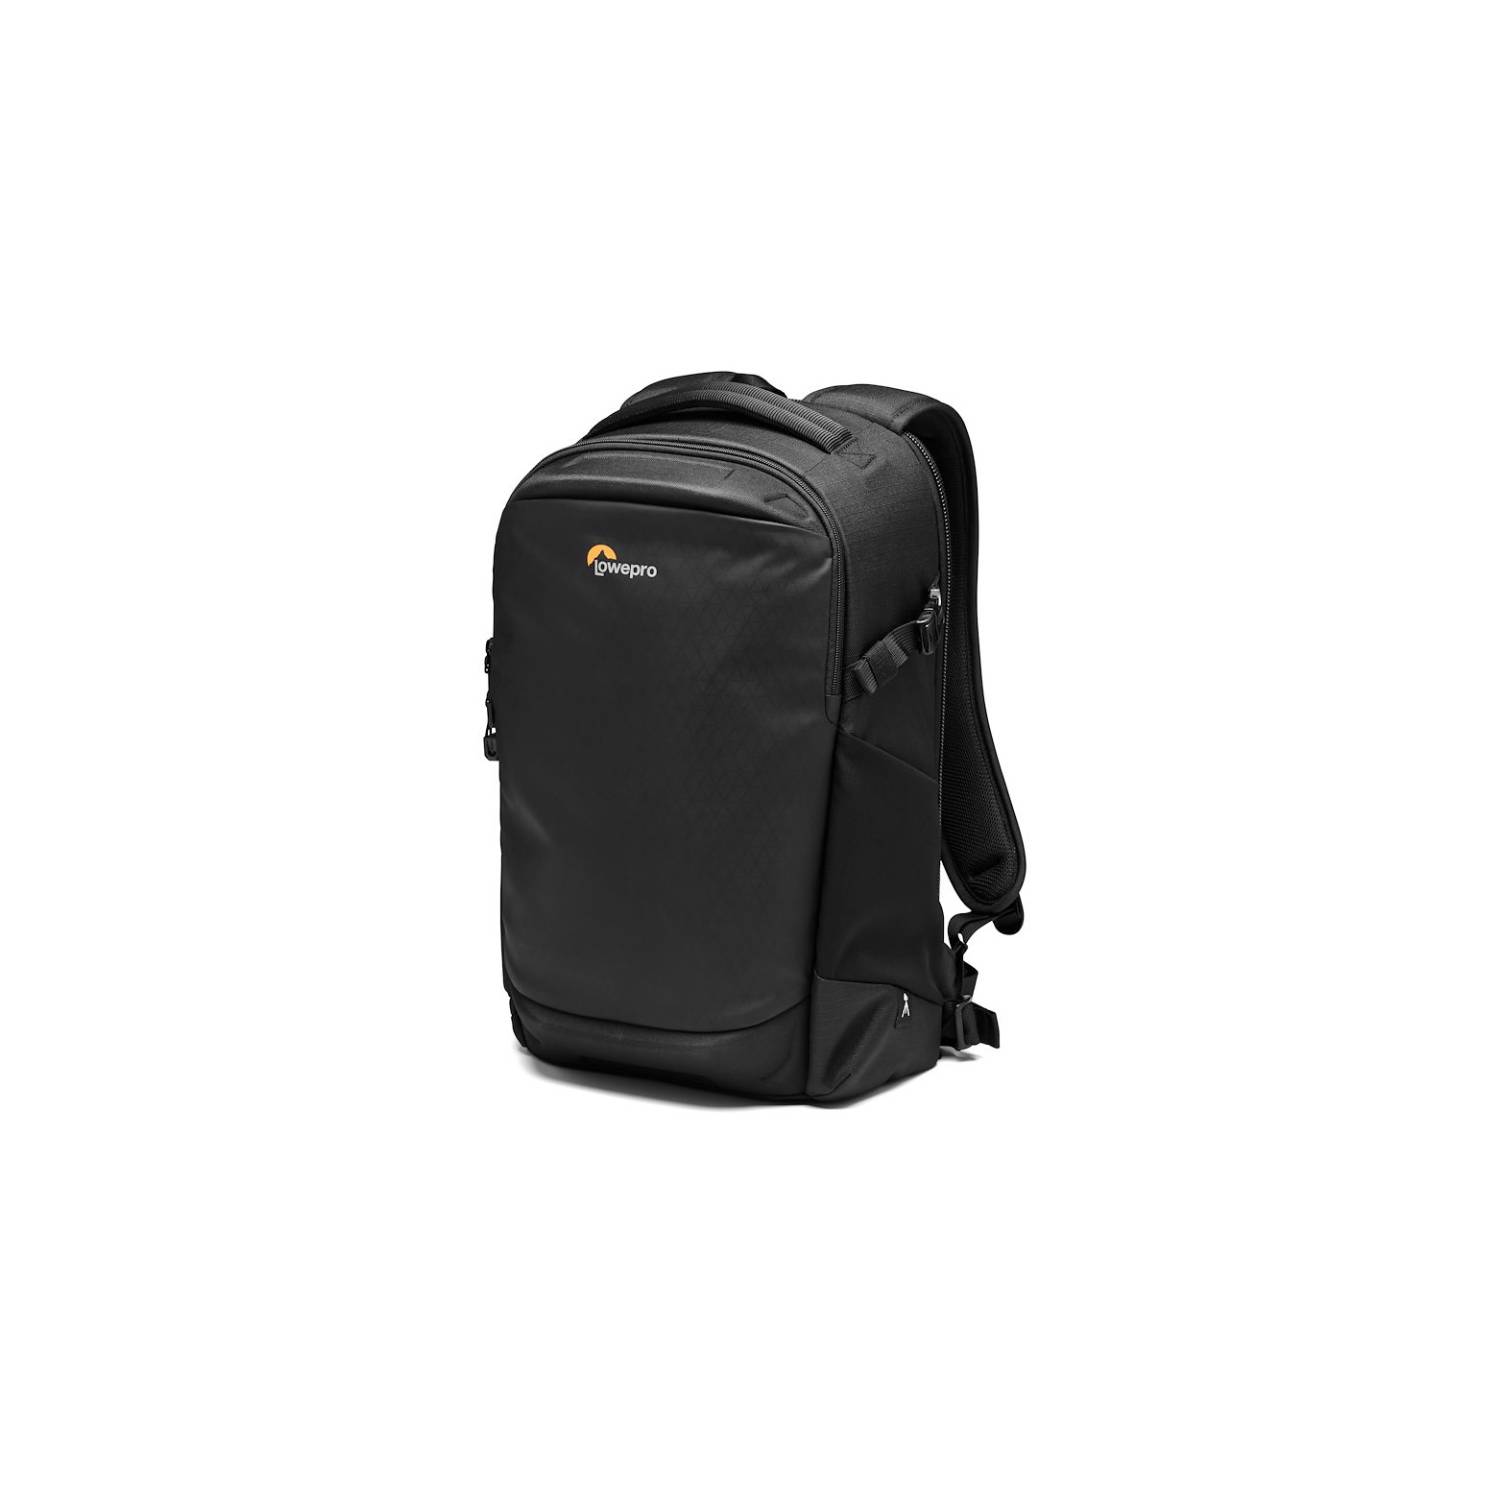 Mochila para cámara Lowepro Flipside Backpack 300 AW III